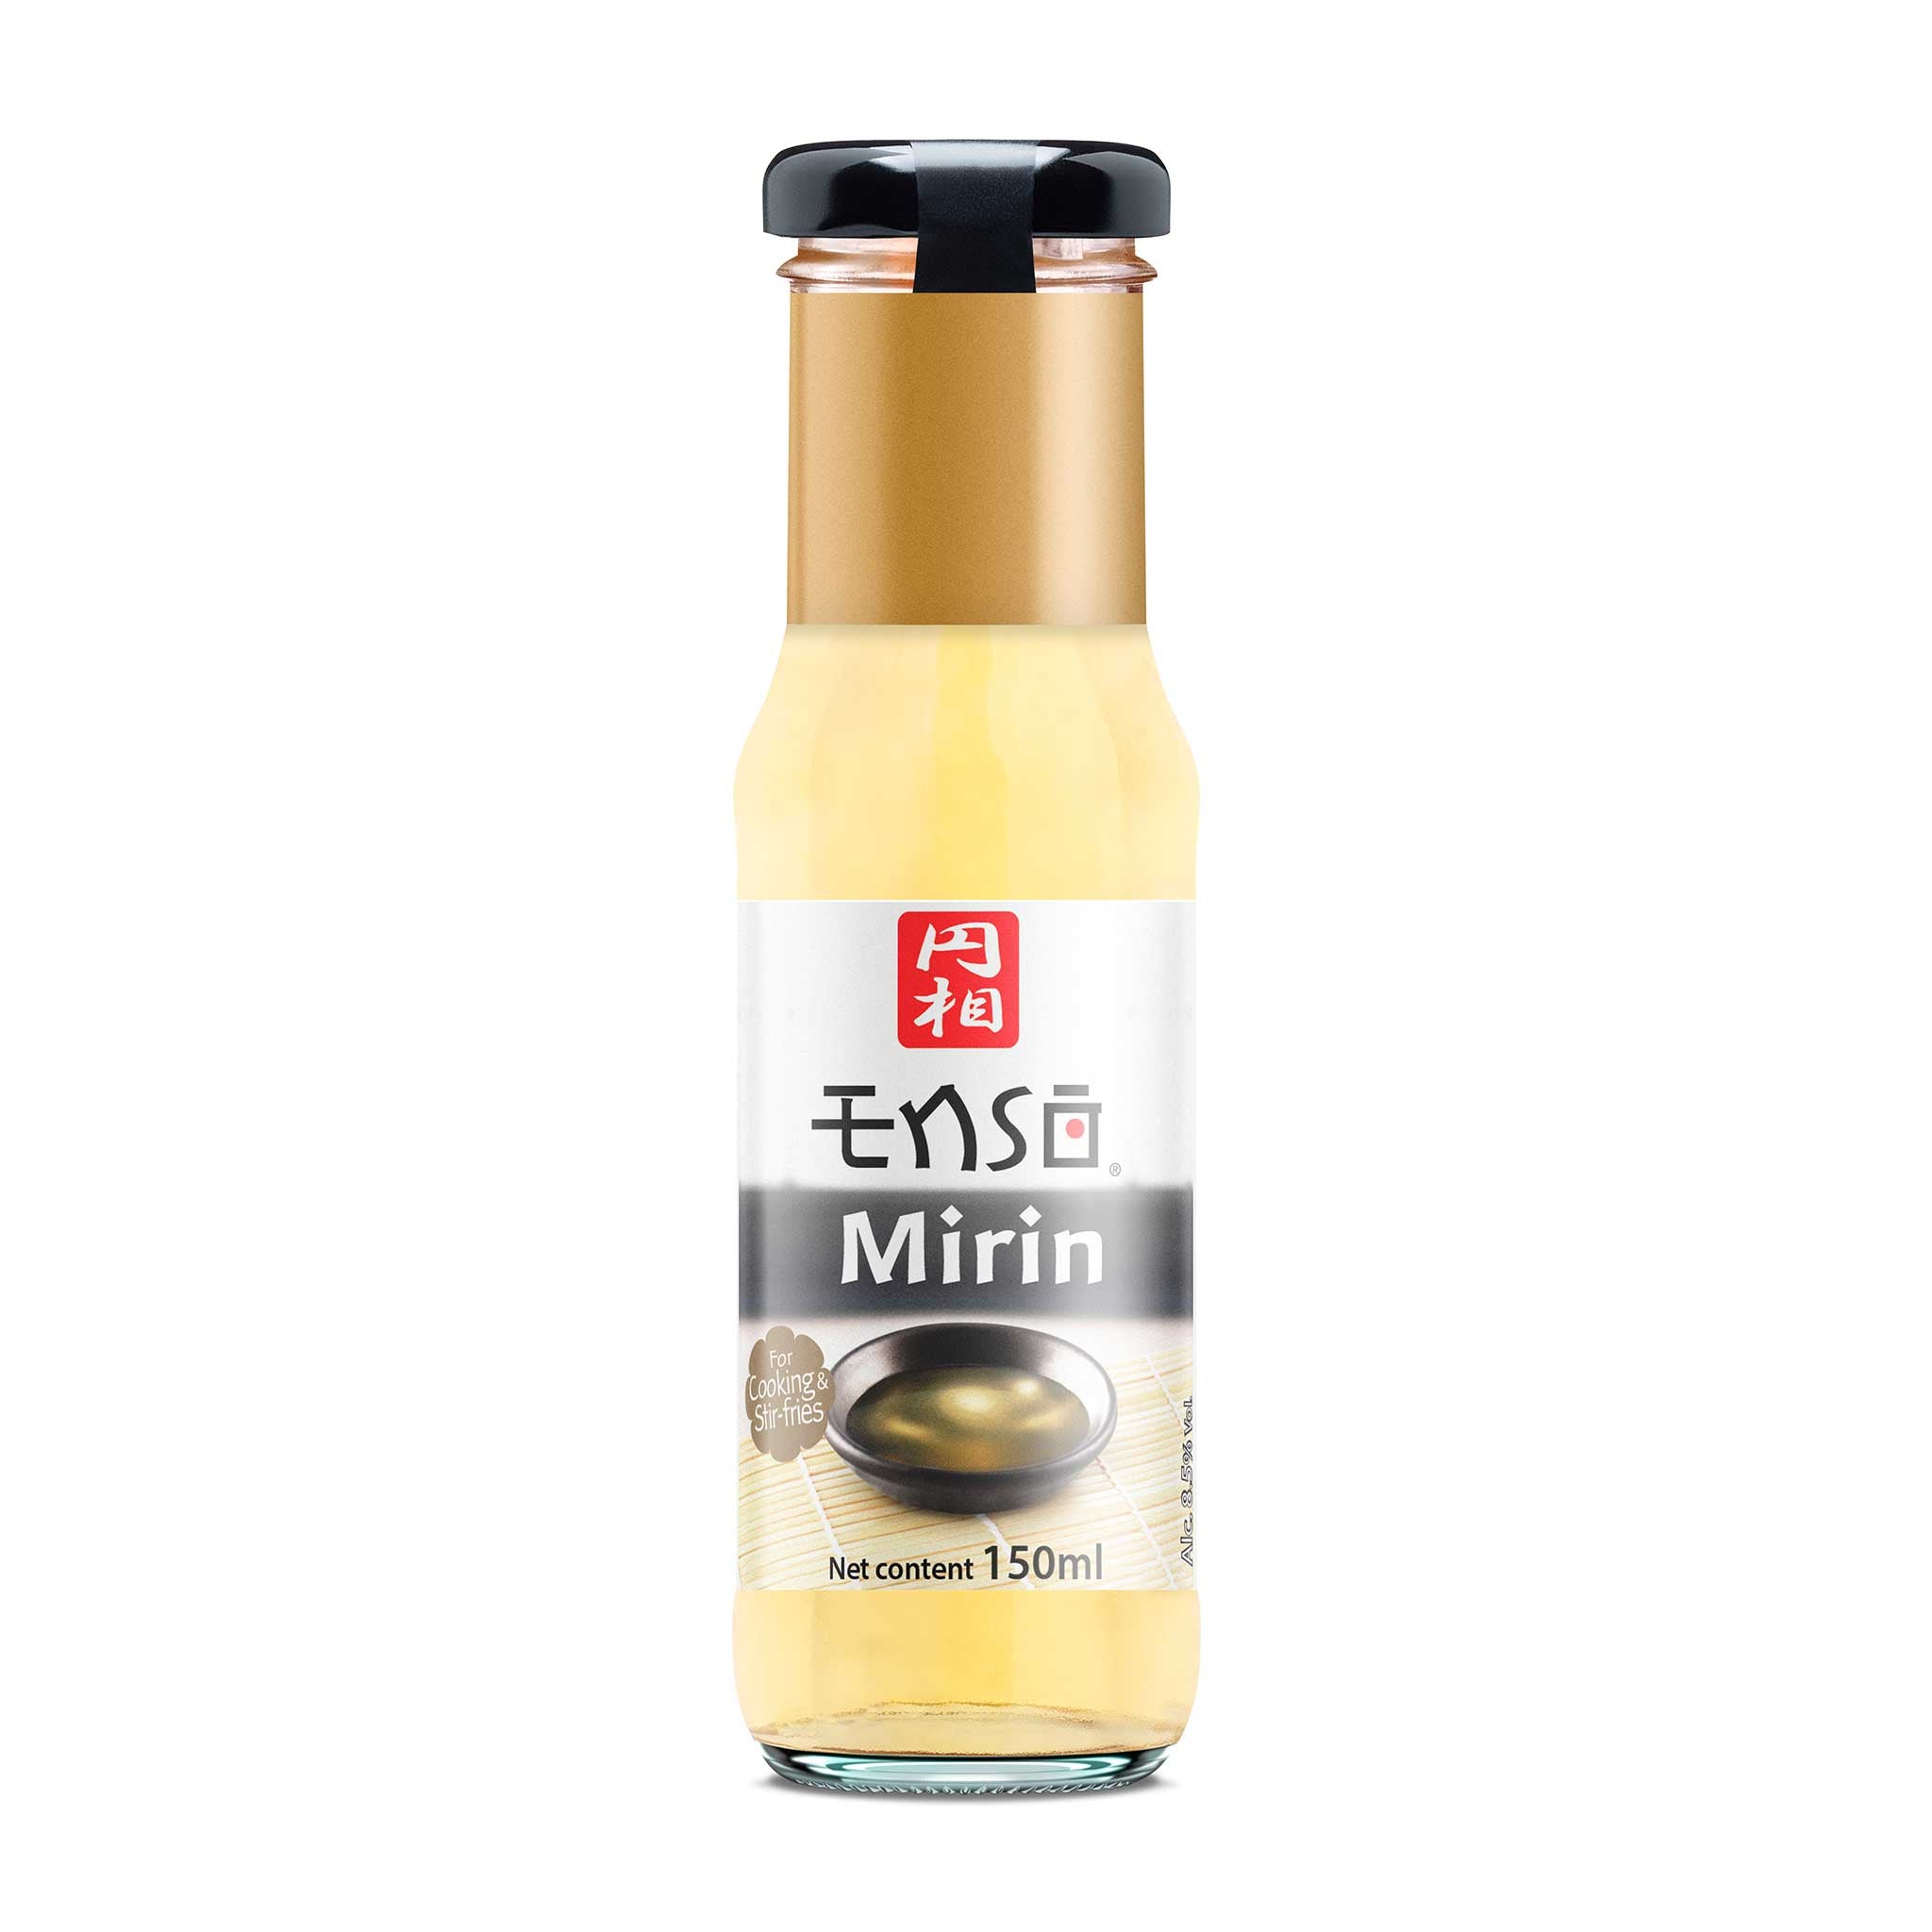 Acheter de la sauce de Mirin